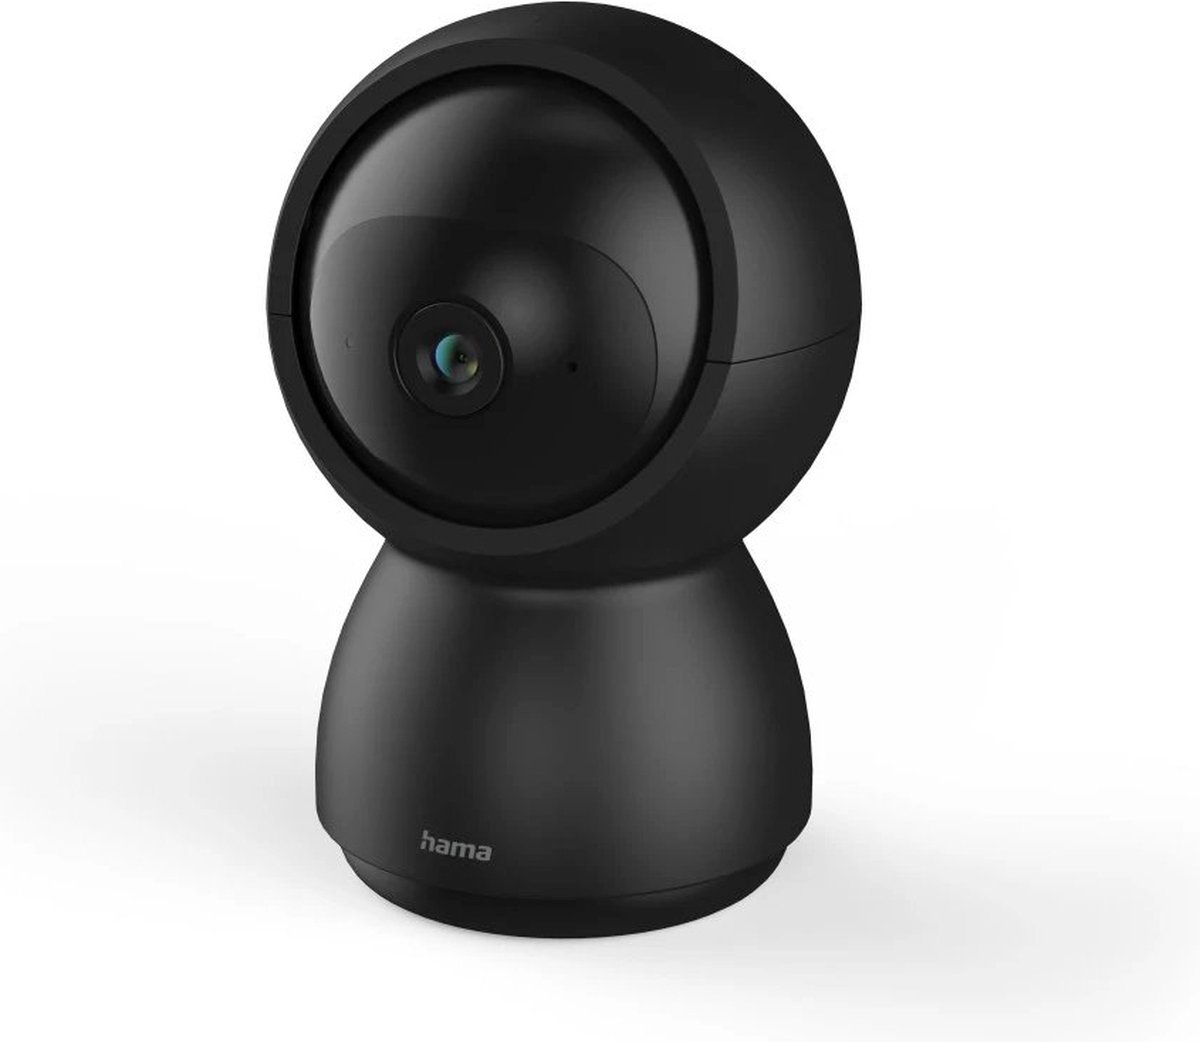 Hama Wi-Fi Bewakingscamera voor Binnen - WLAN Draaibare Camerabeveilging met Bewegingsdetentie - Full HD 1080p - Micro SD-kaart tot 128GB - Hama Smart Solution App en Spraakbesturing - Zwart